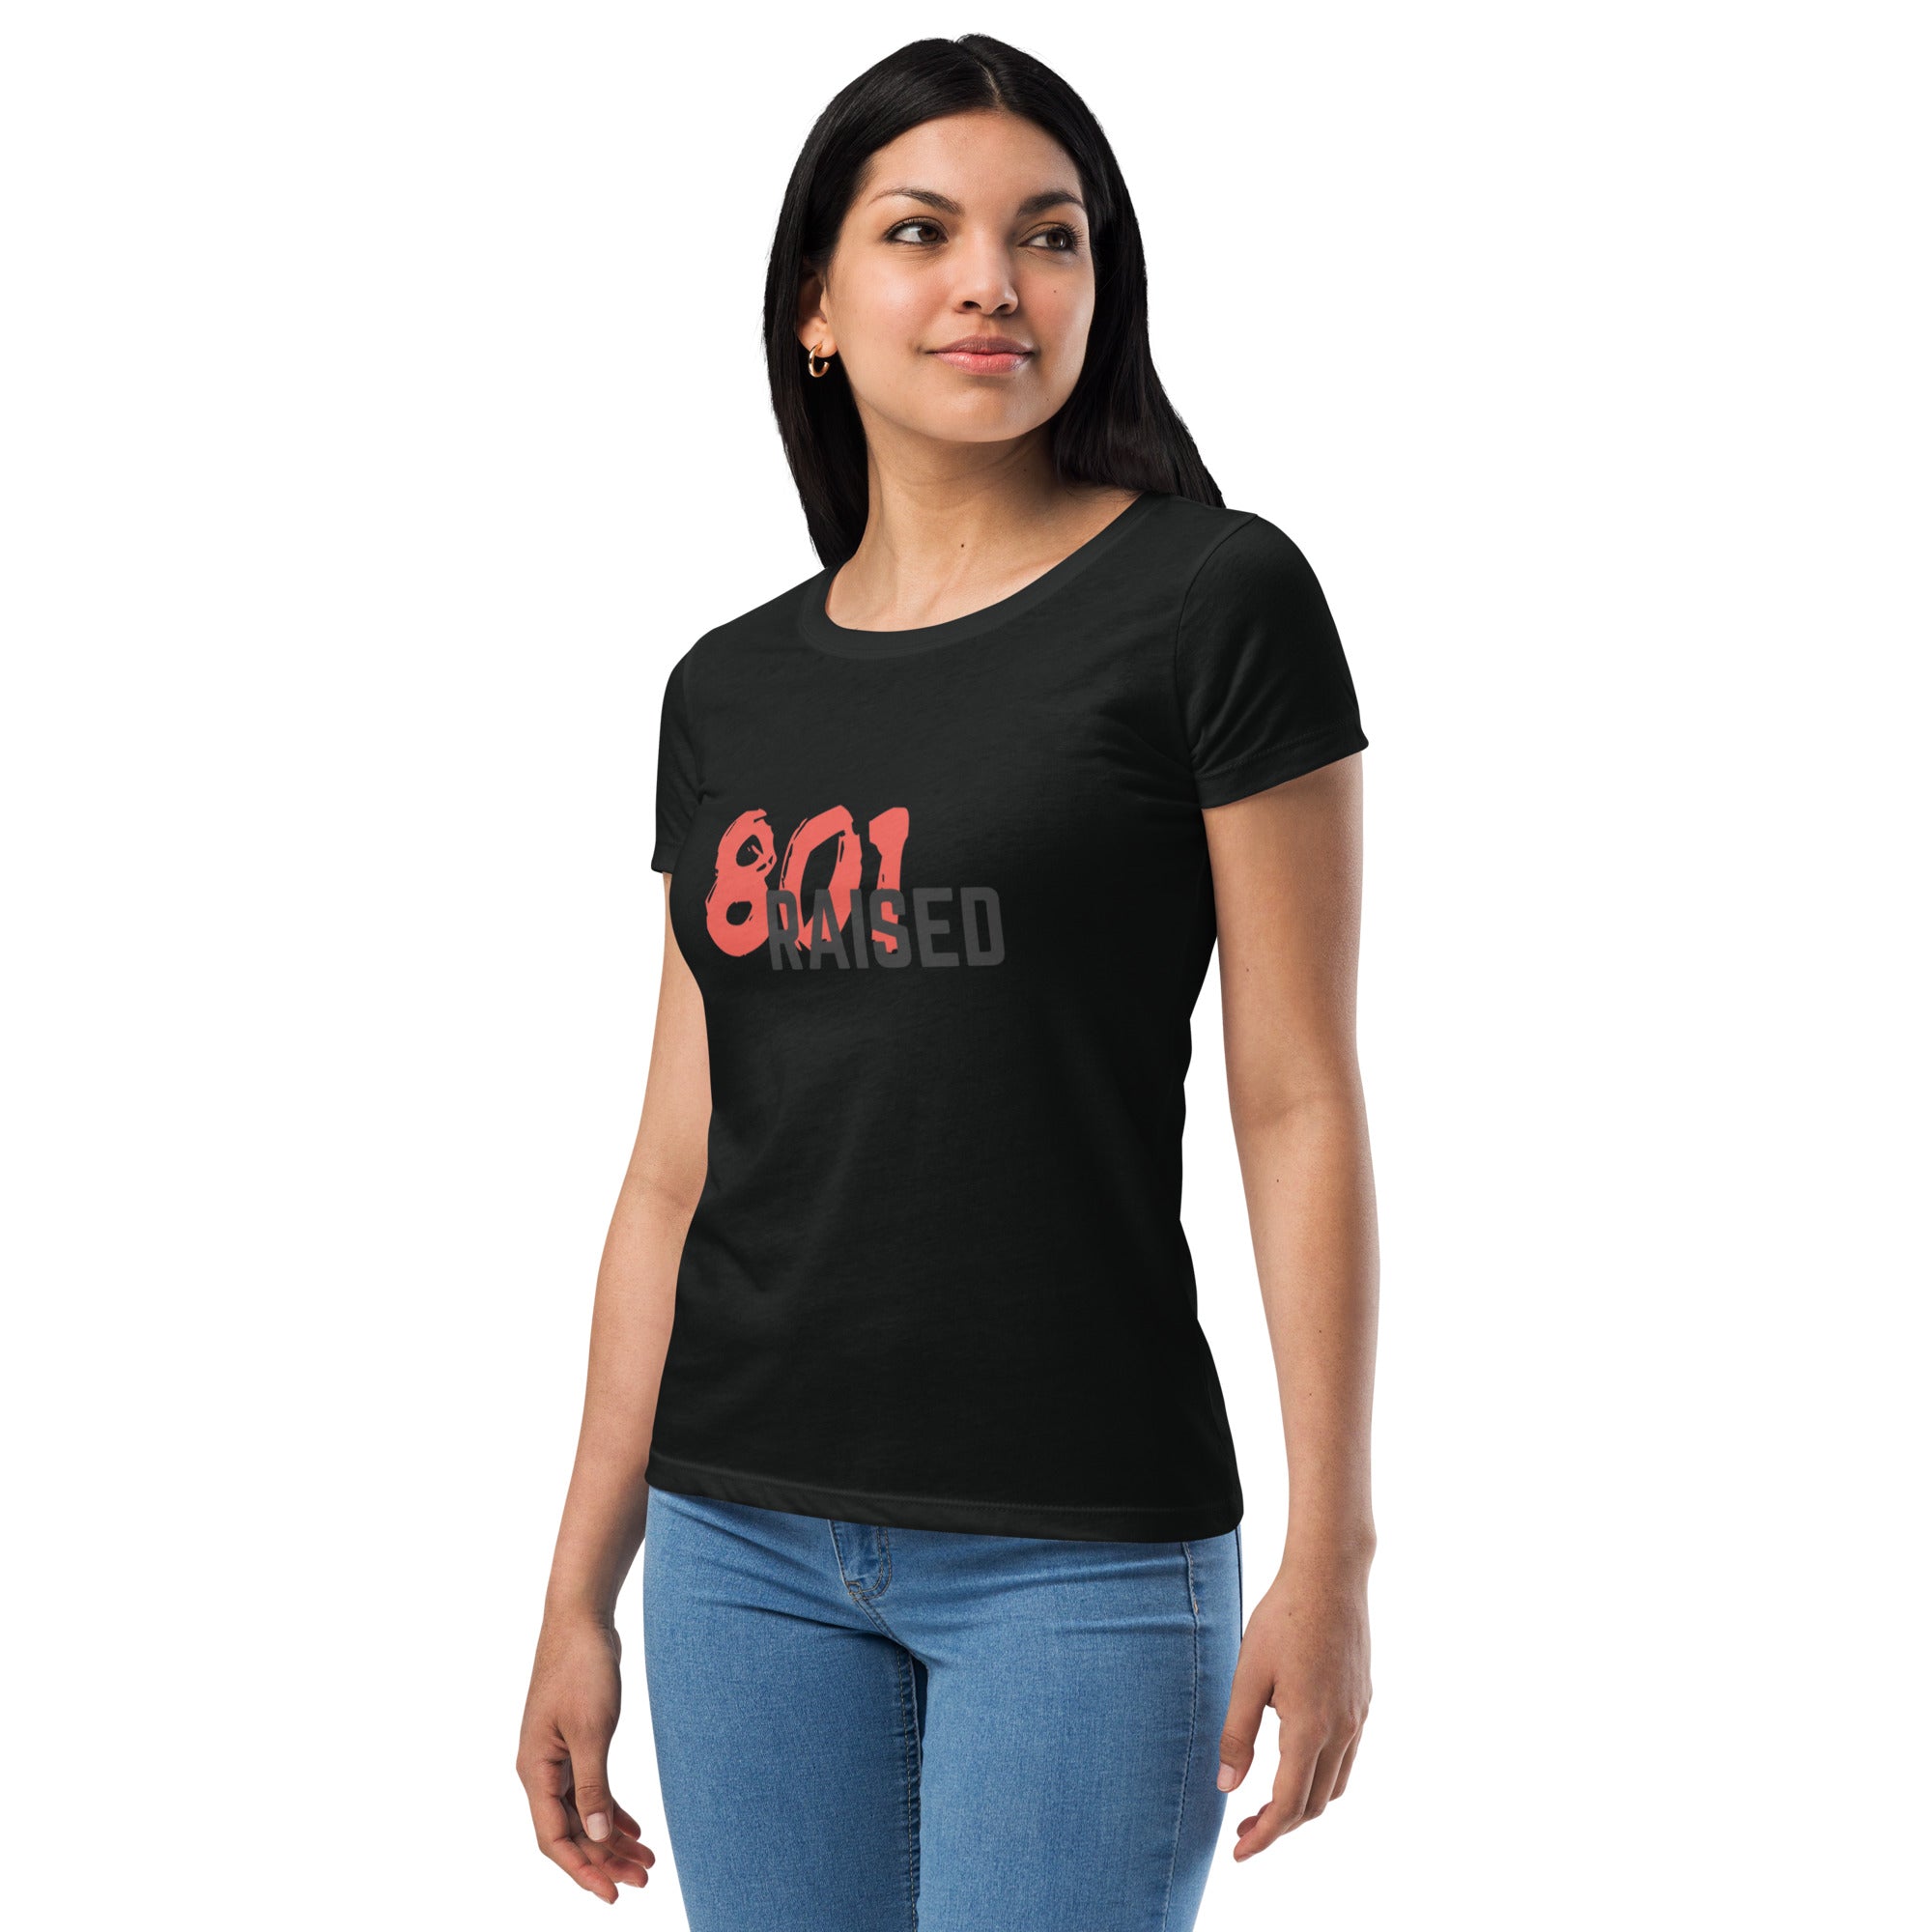 Women’s Fitted 801 Raised T-shirt - 801raised